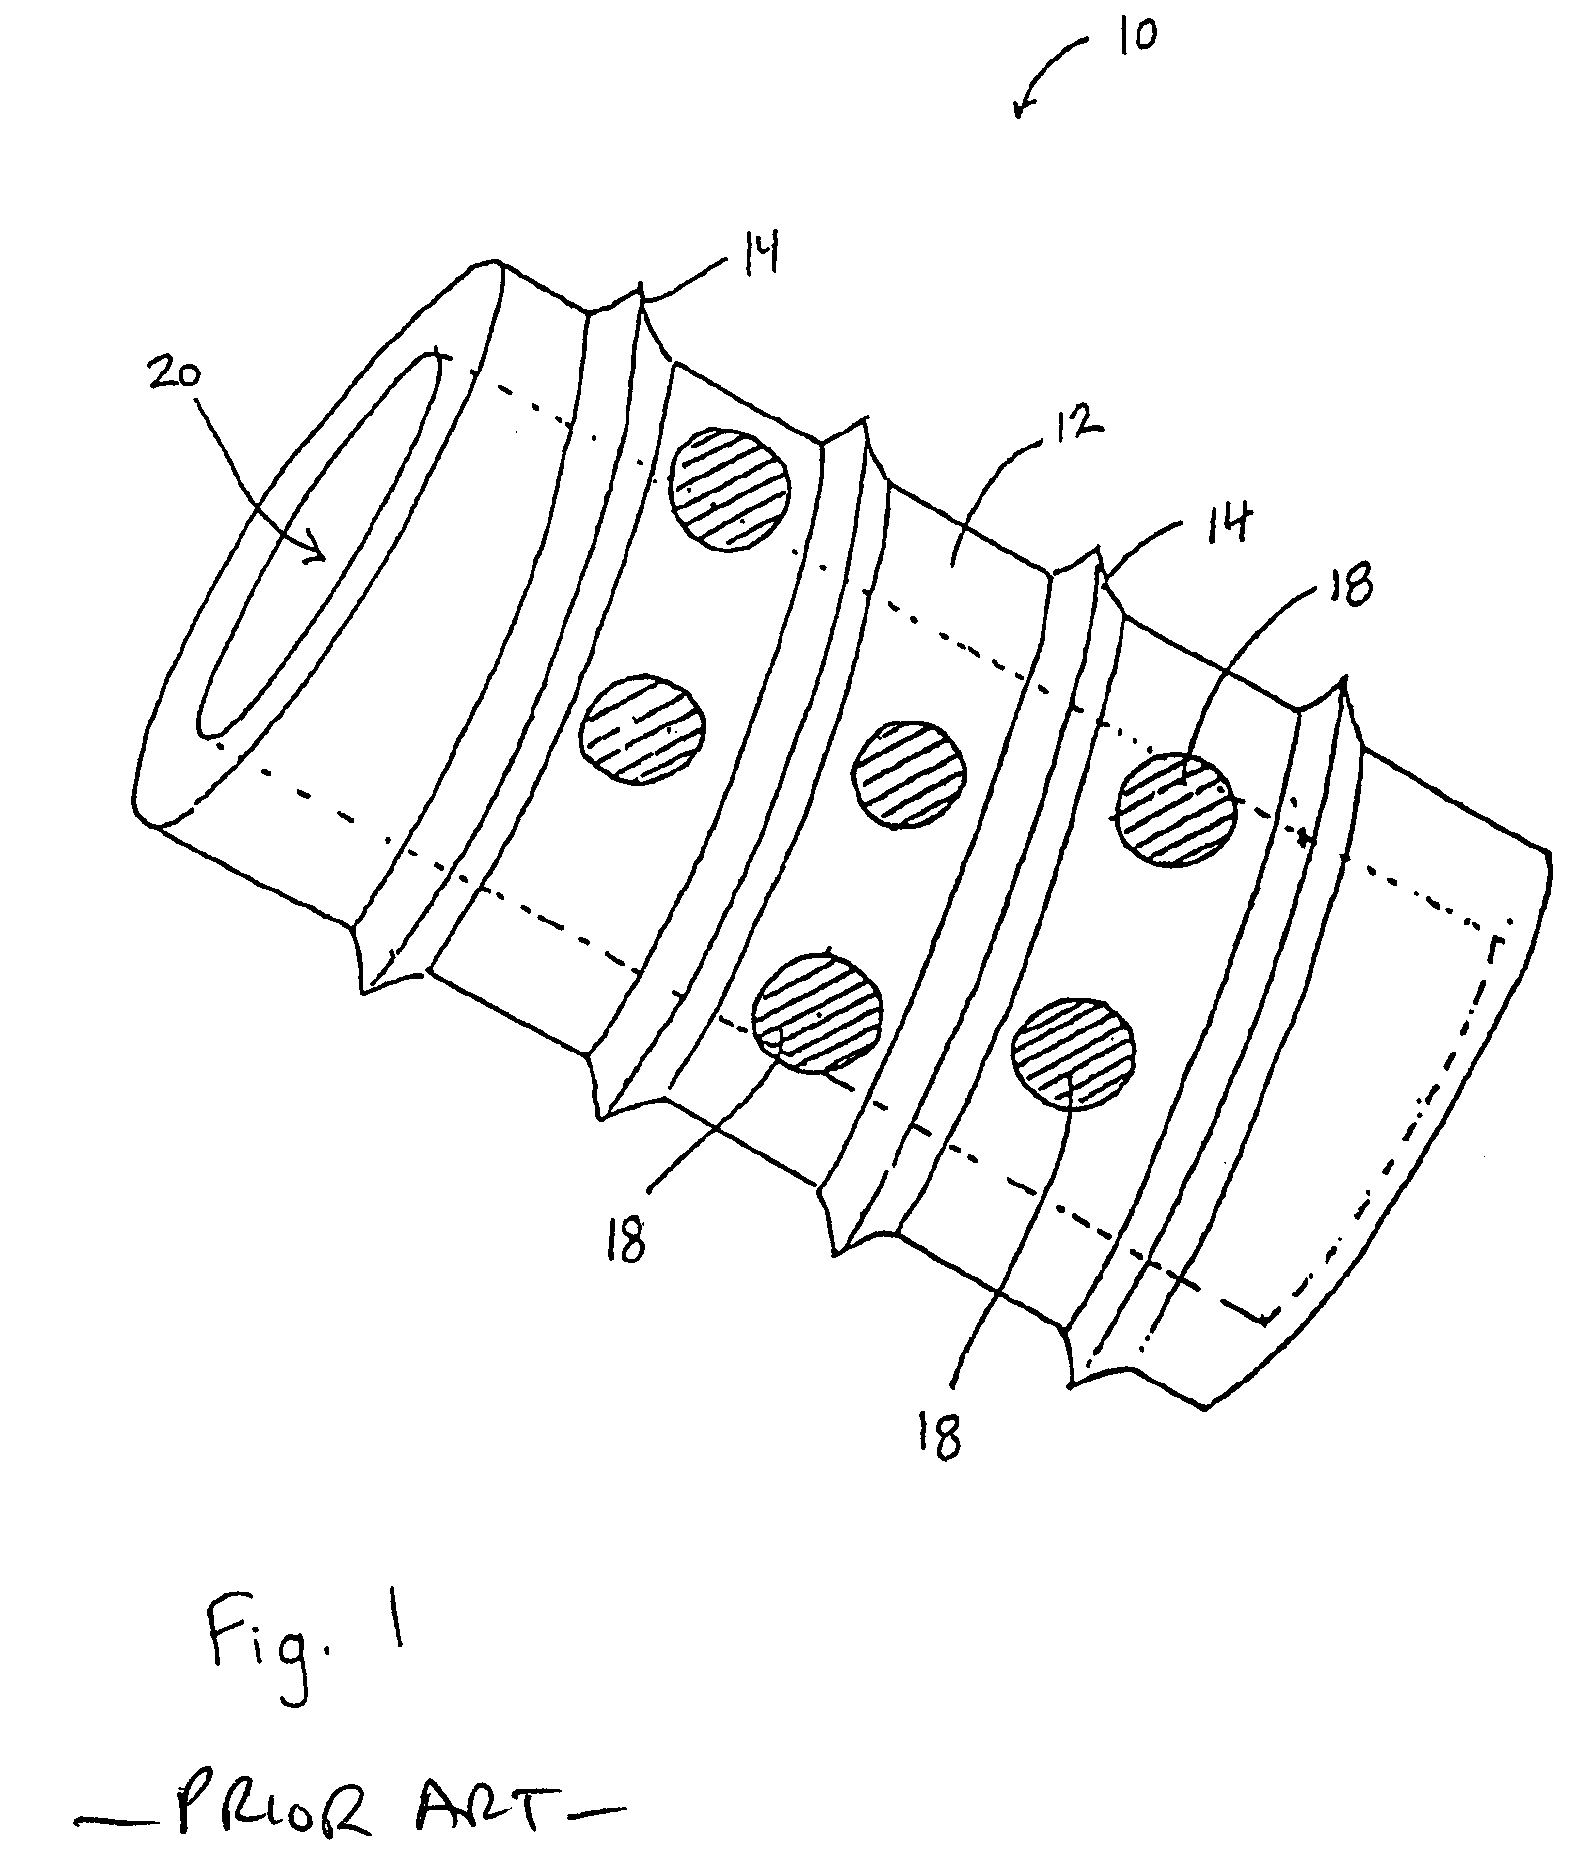 Intervertebral spacer device utilizing a belleville washer having radially extending grooves